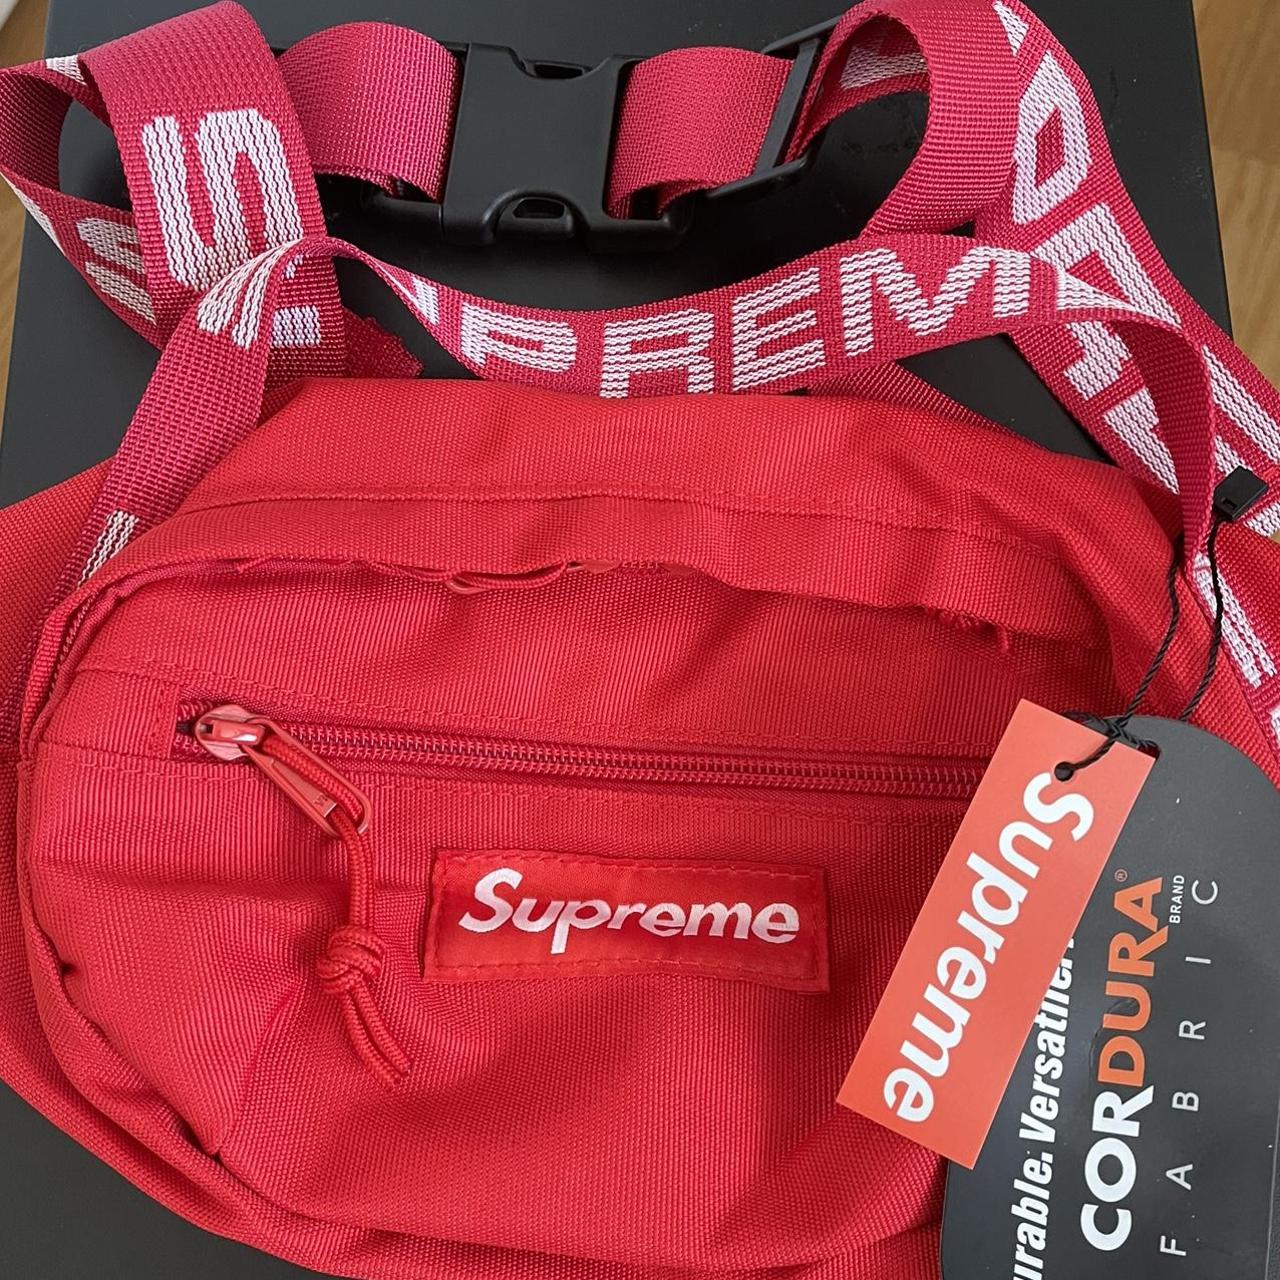 Hi I'm selling supreme bag new with tag thank you - Depop